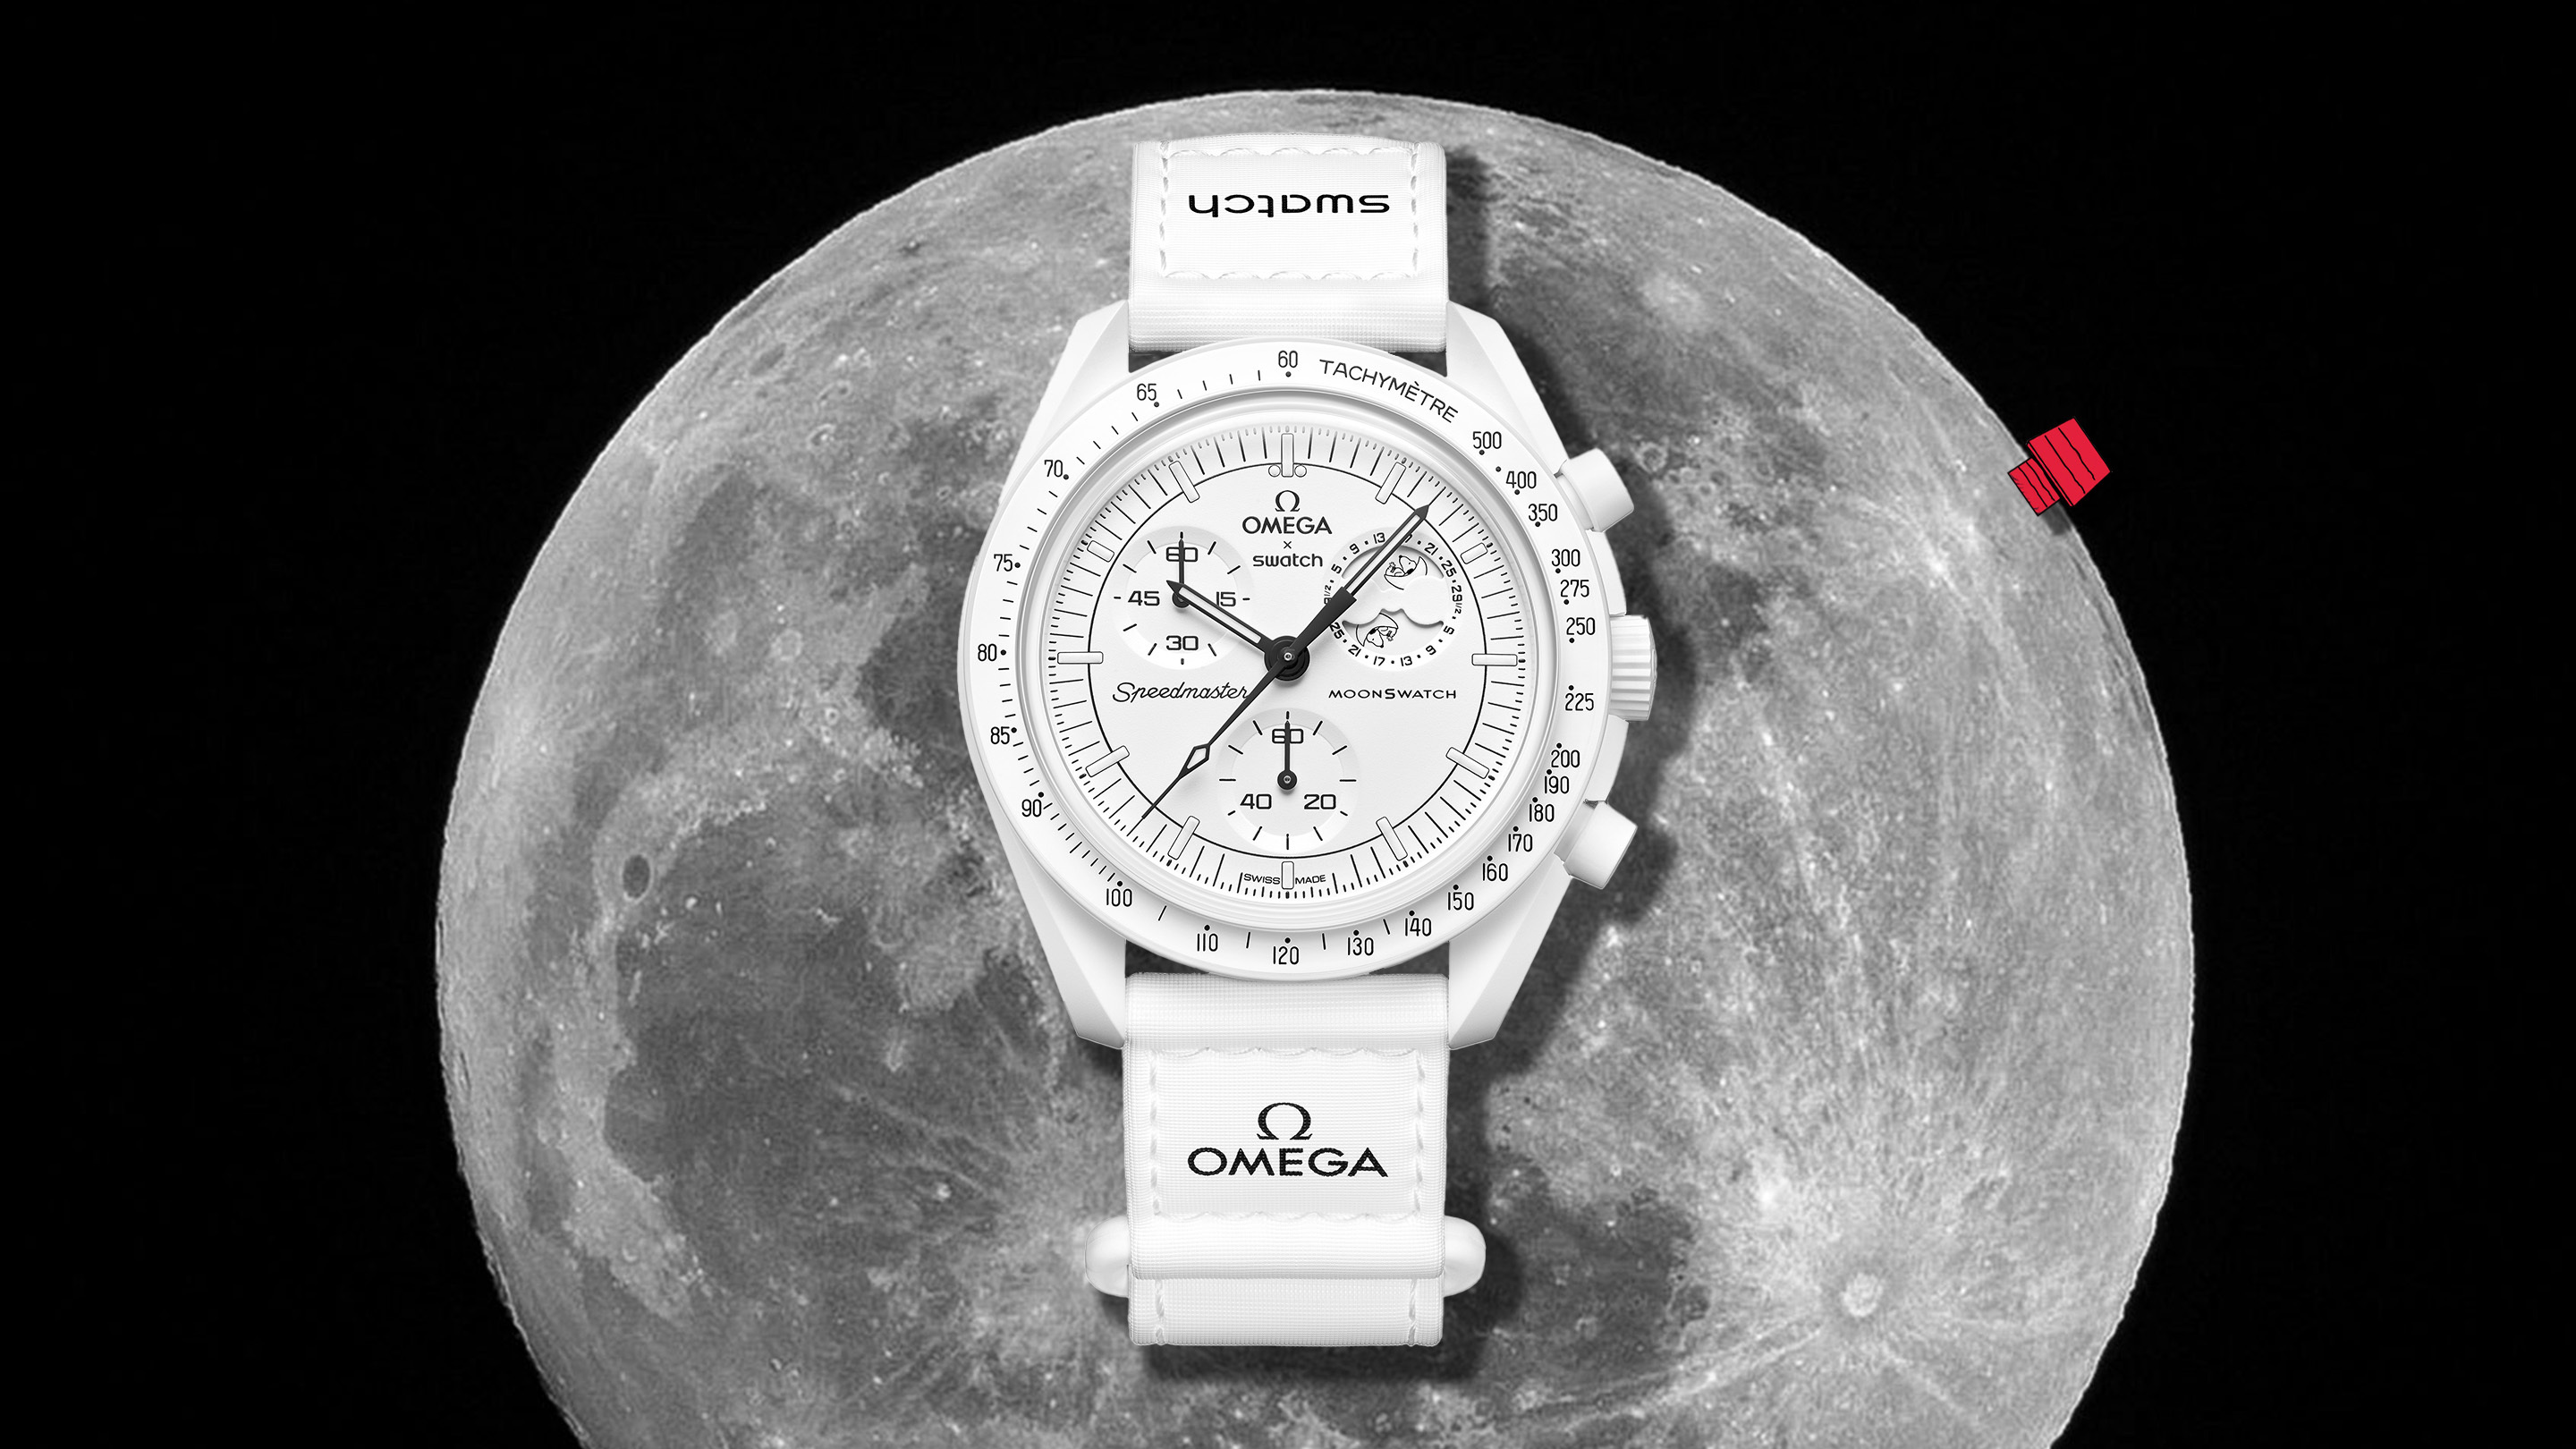 Snoopy x OMEGA x Swatch MoonSwatch Whitemoonswatch